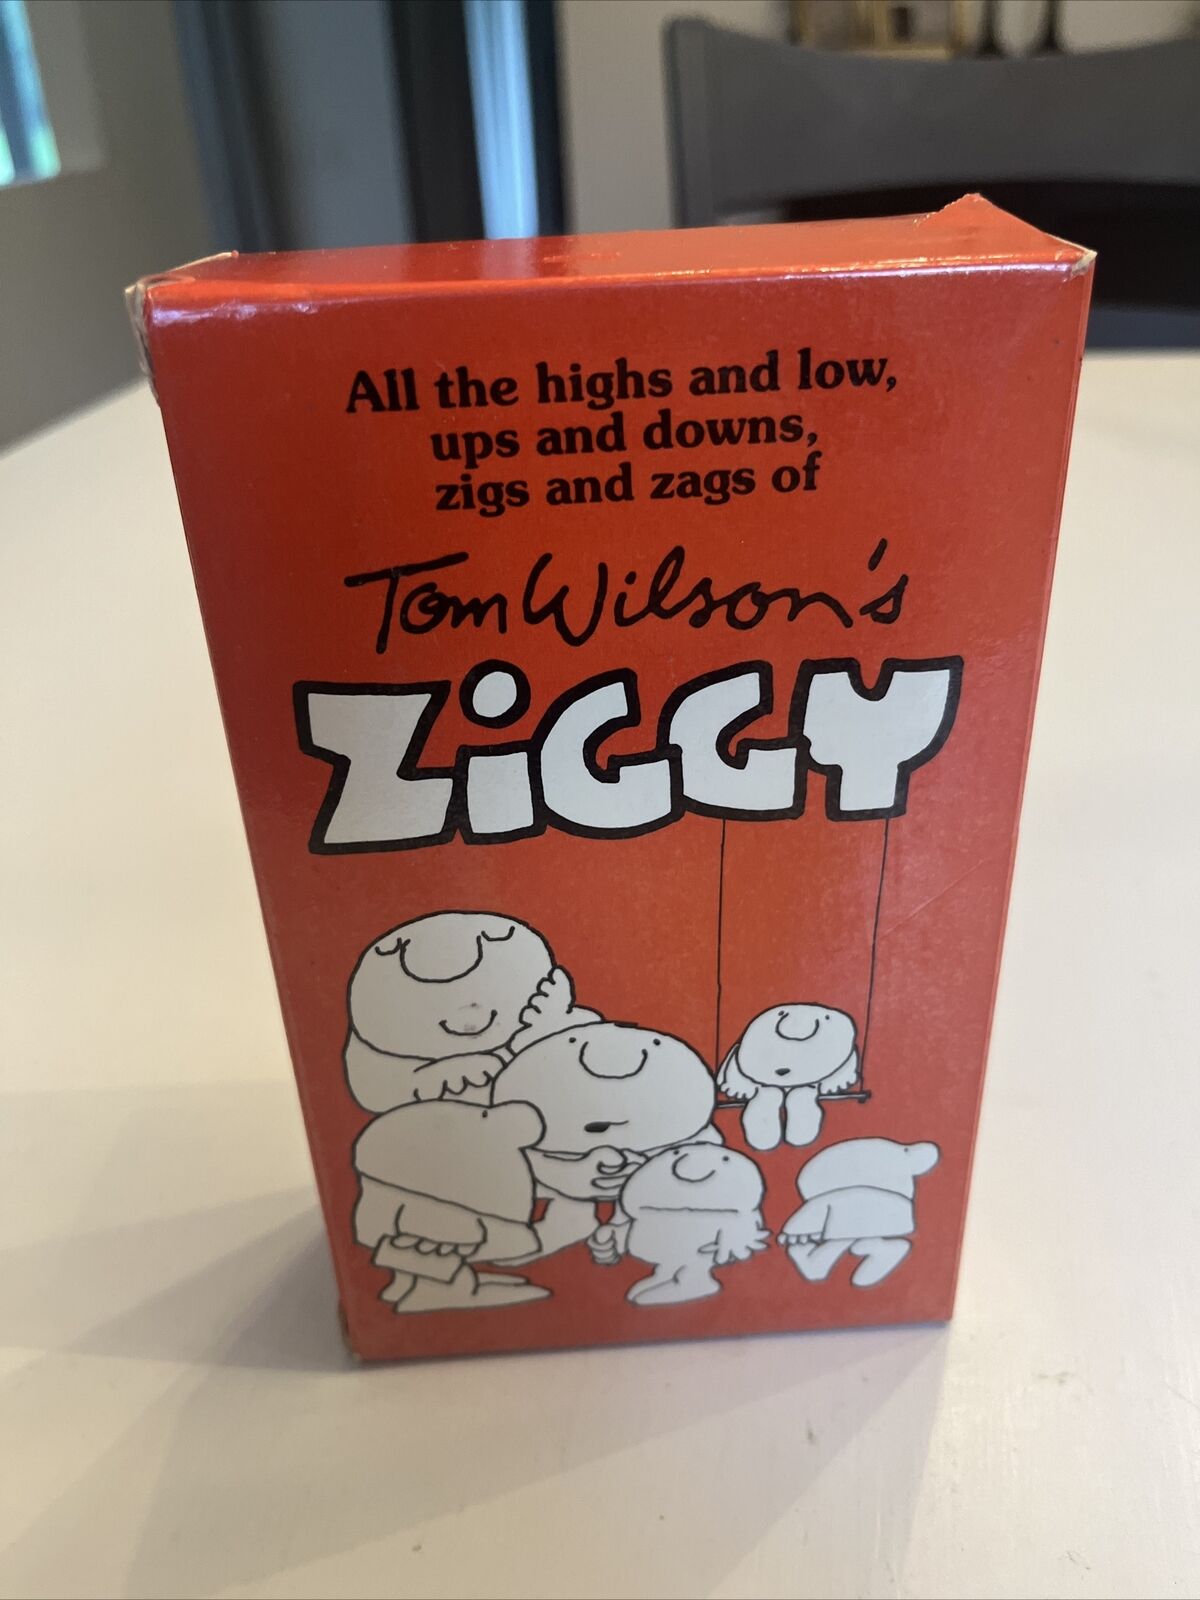 Tom Wilson's Ziggy Boxed Set